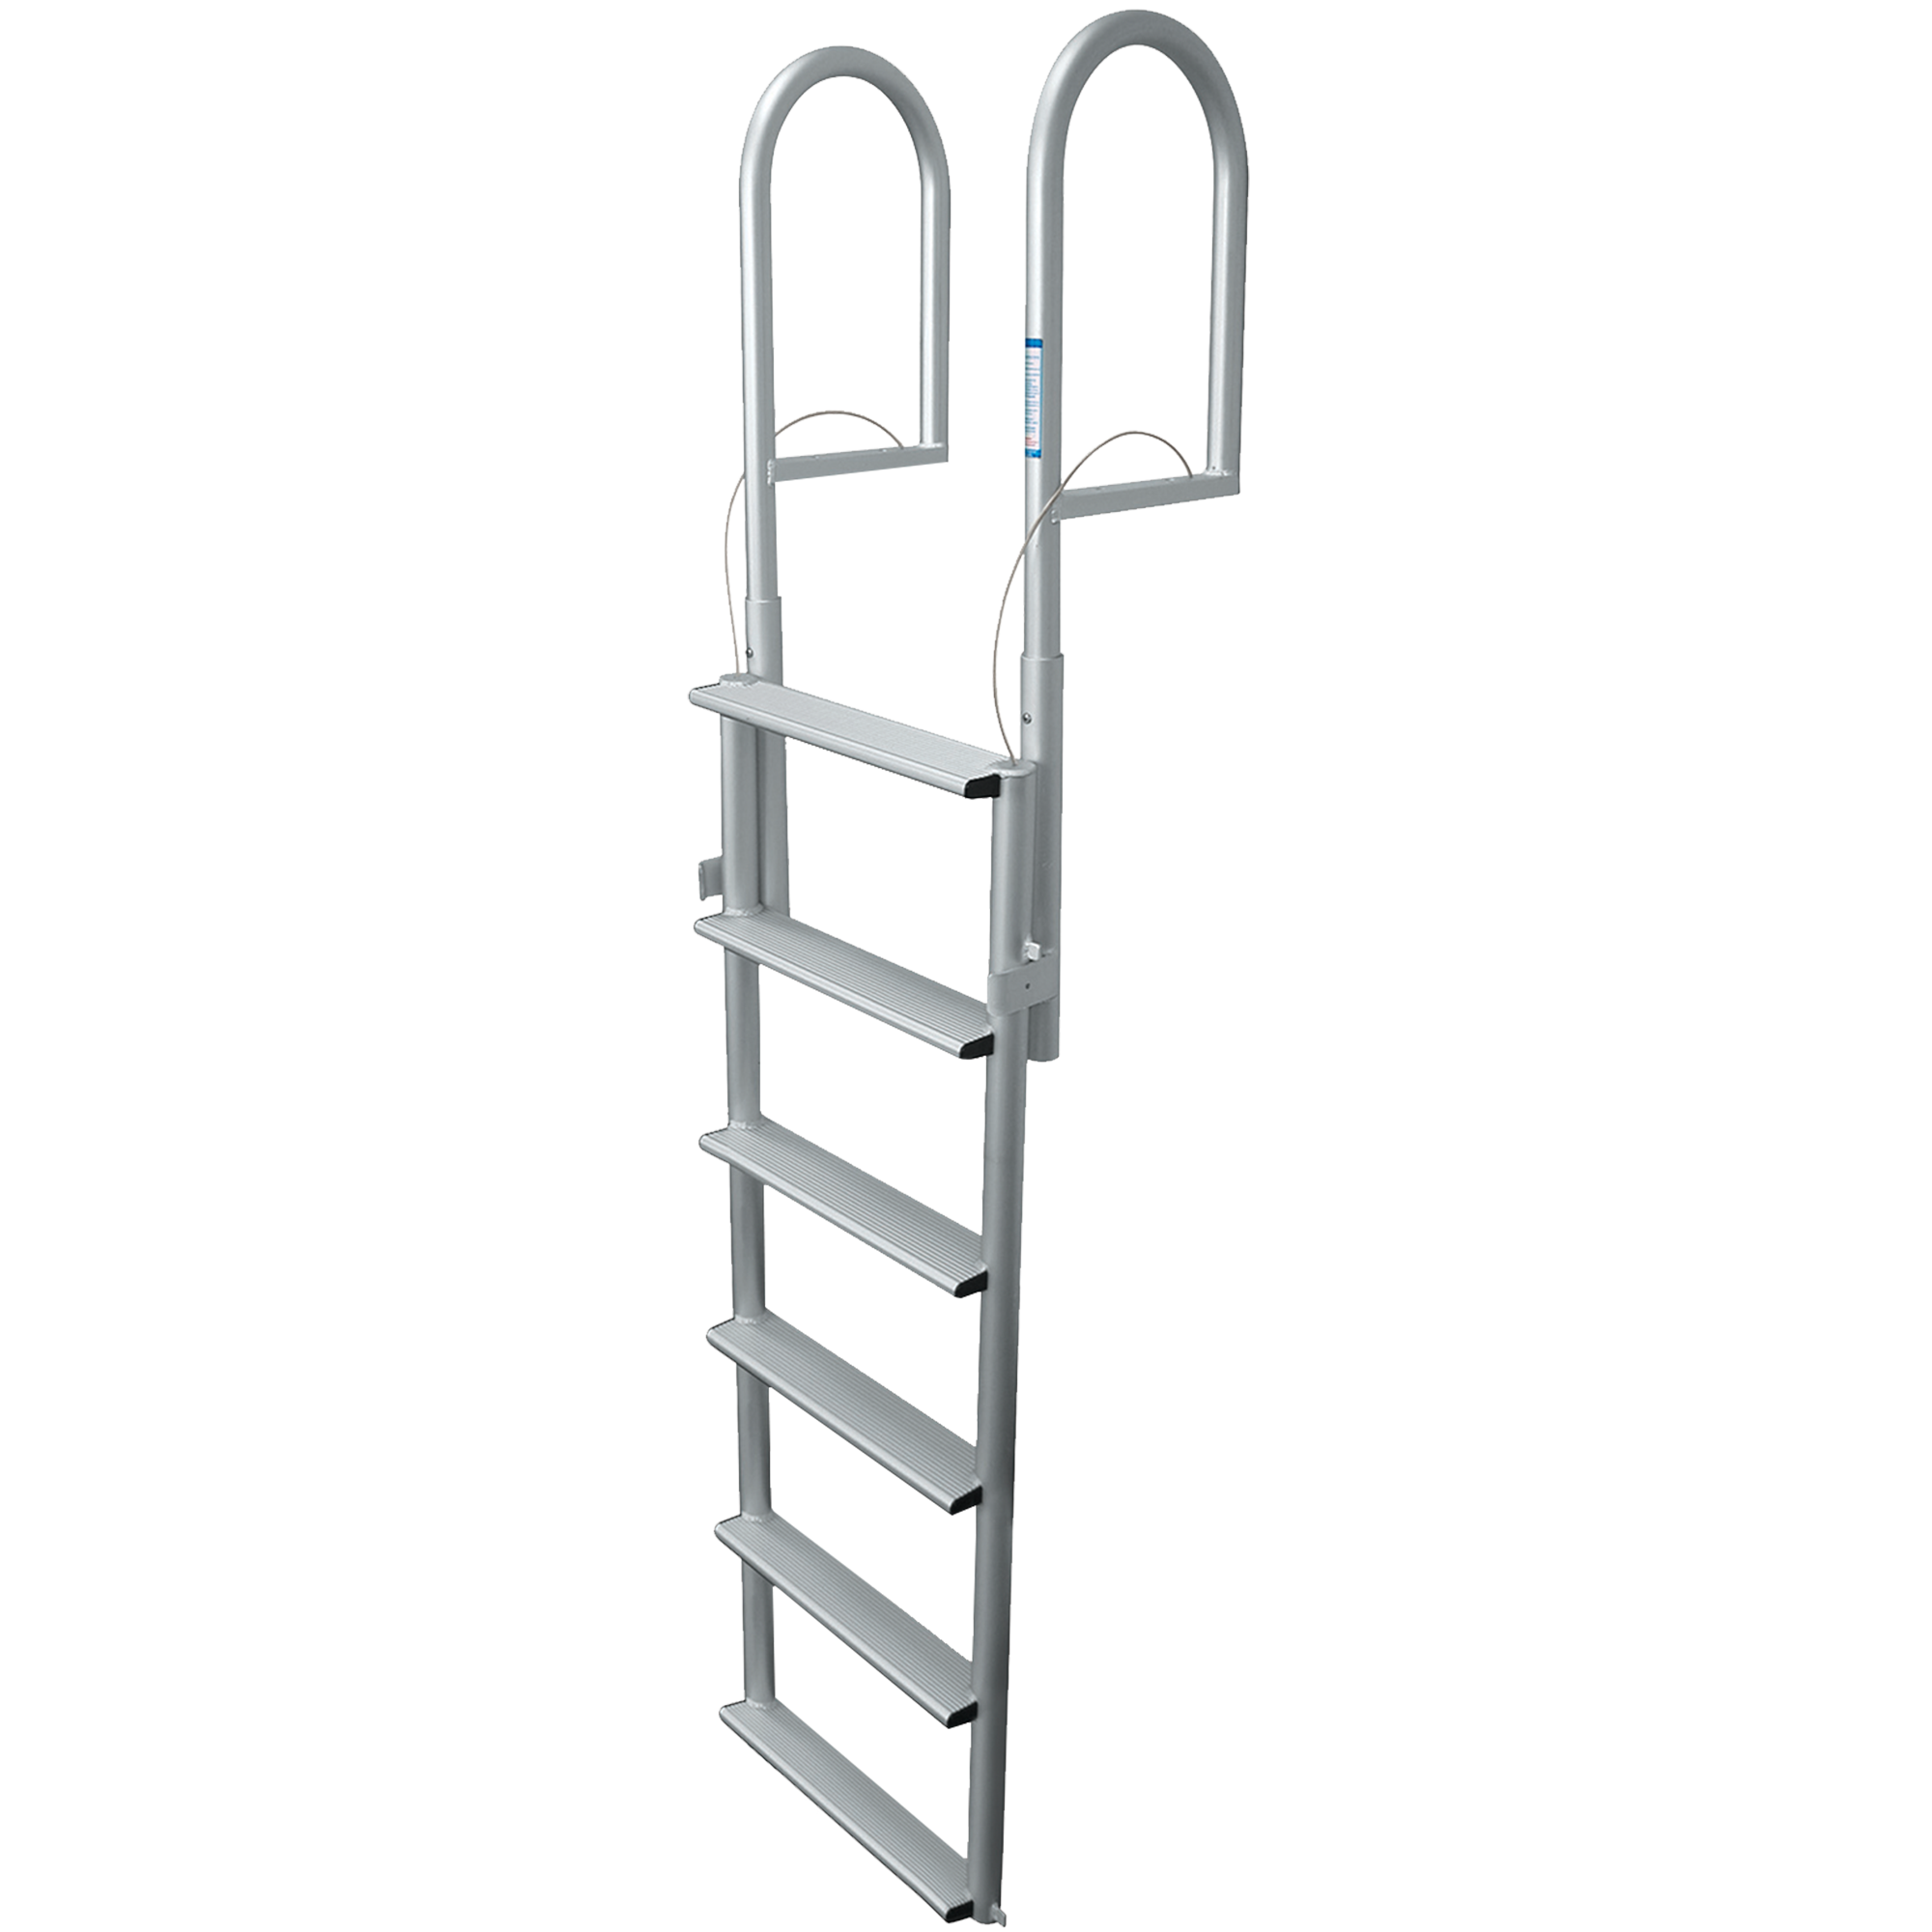 6 Rung Aluminum Lifting Ladder - 4" Wide Step